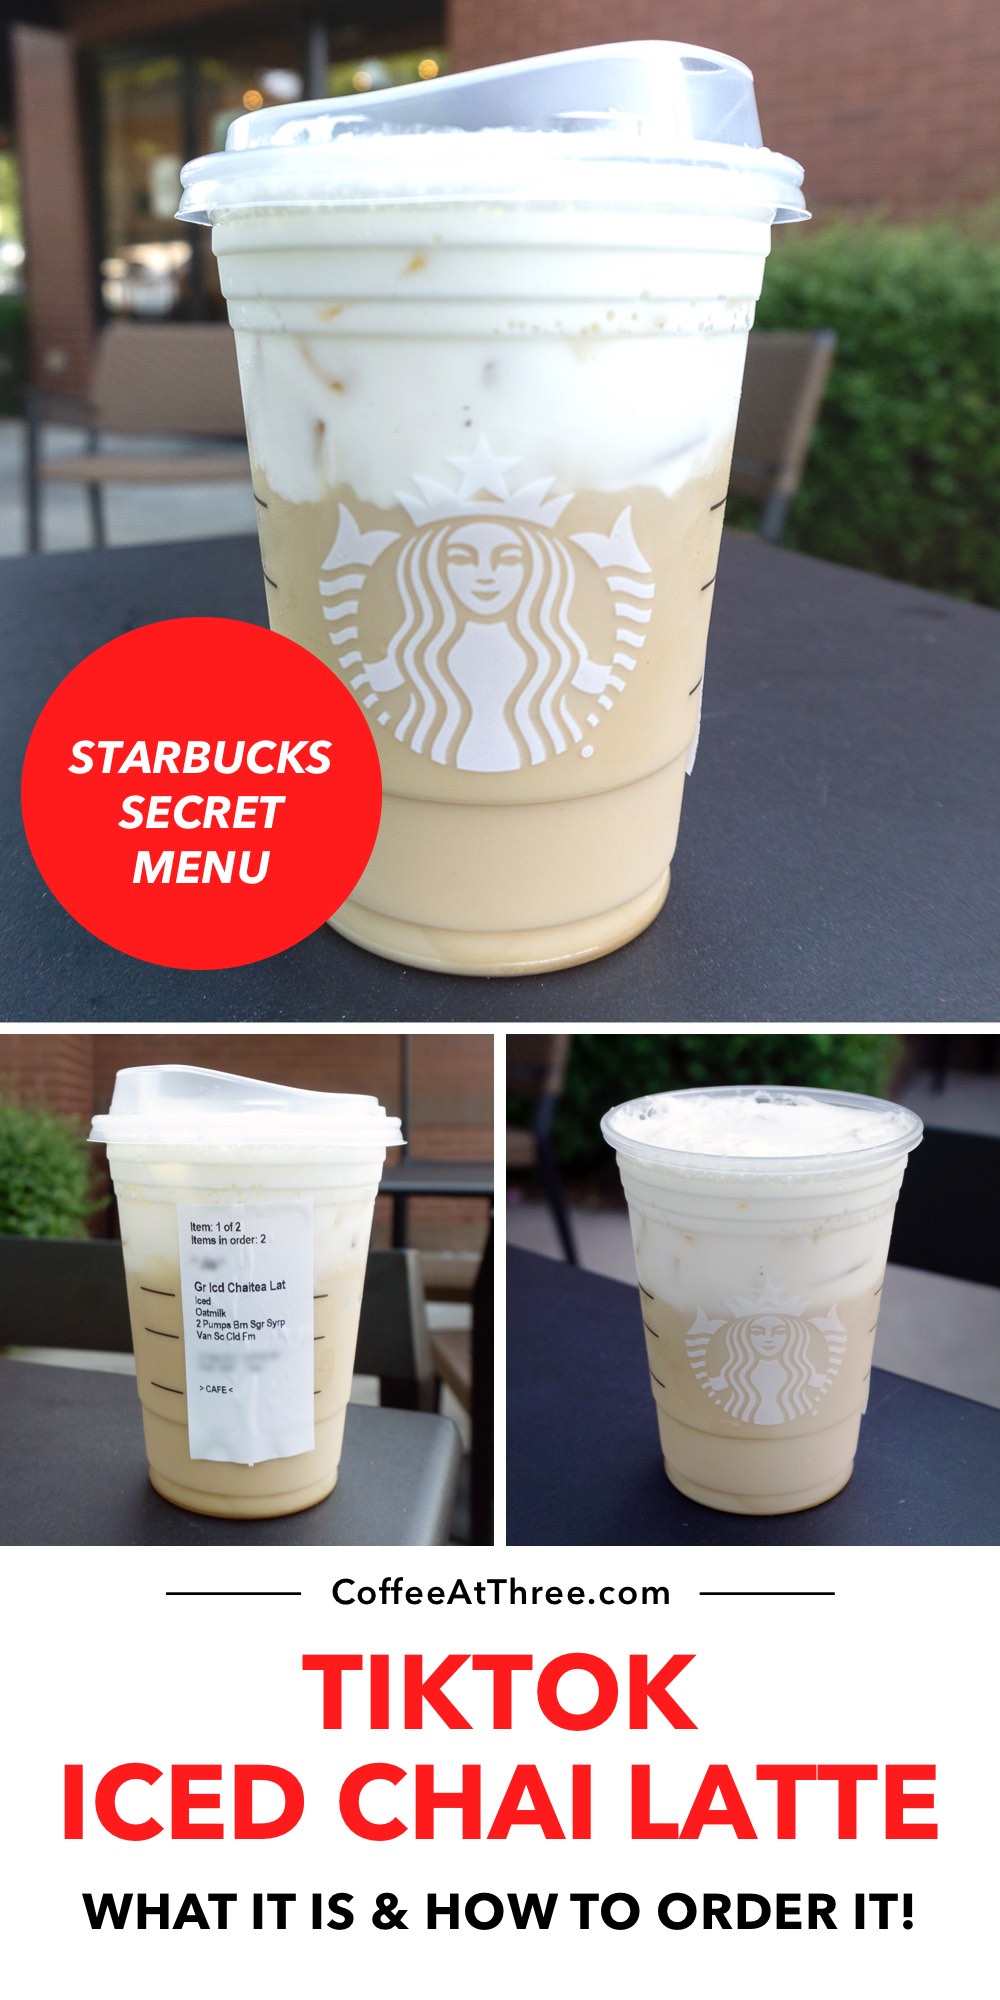 TikTok Iced Chai Latte (Starbucks Secret Menu)